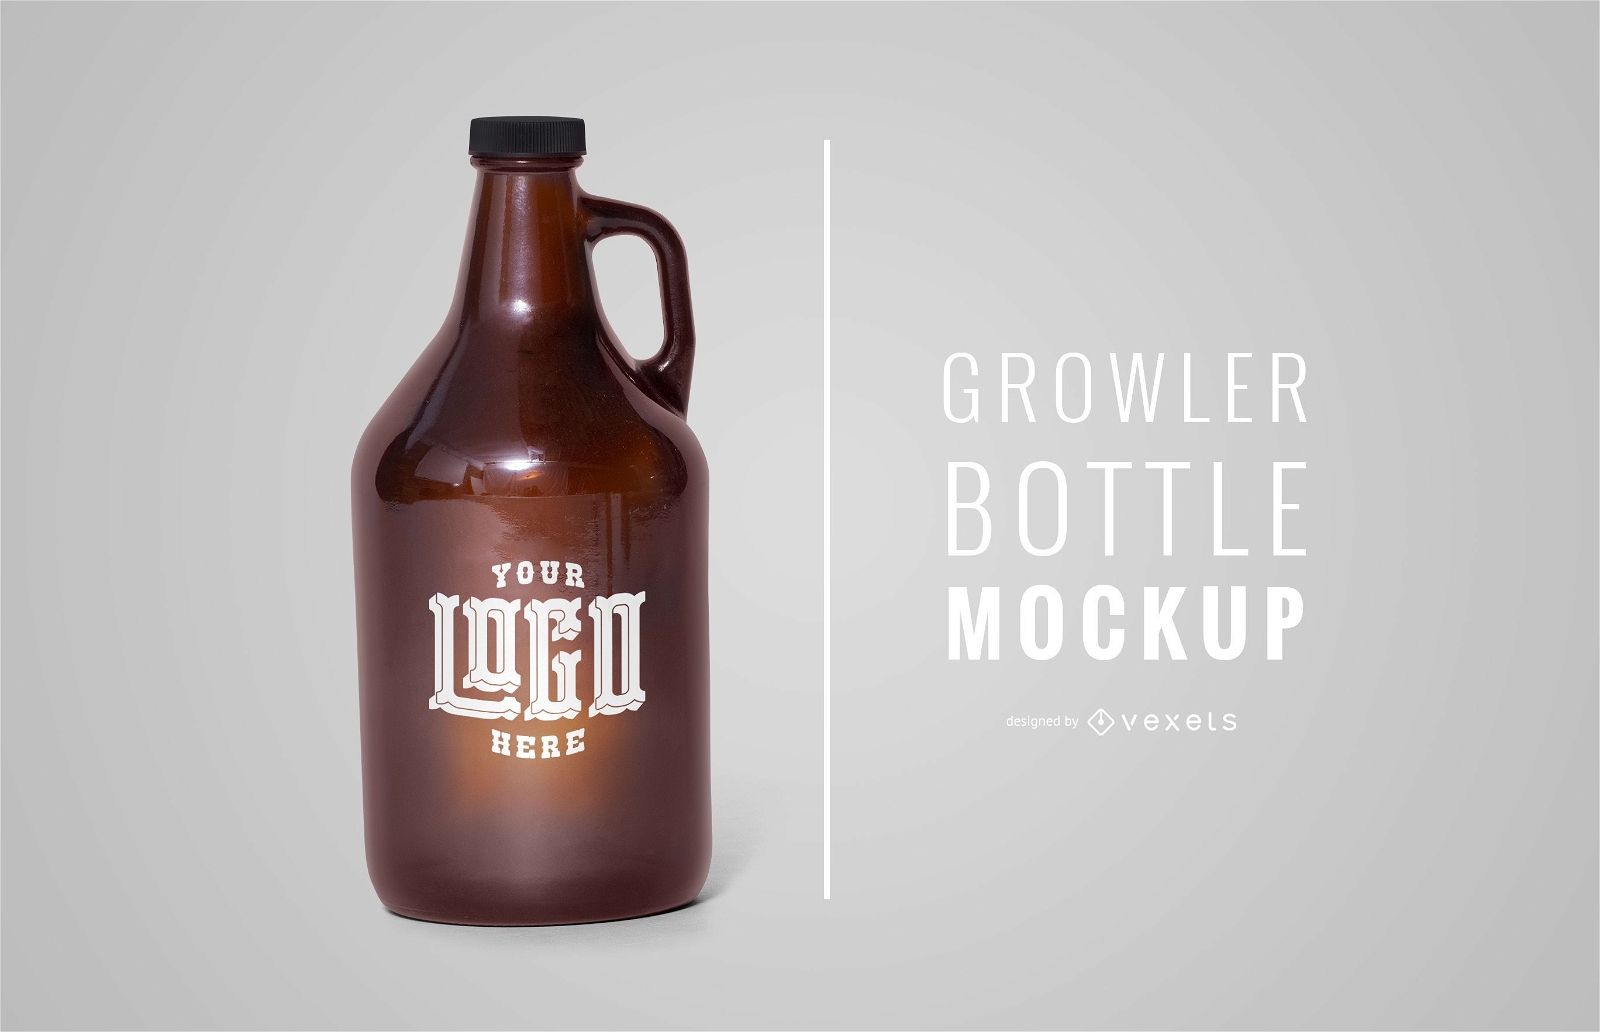 Growler bottle mockup design